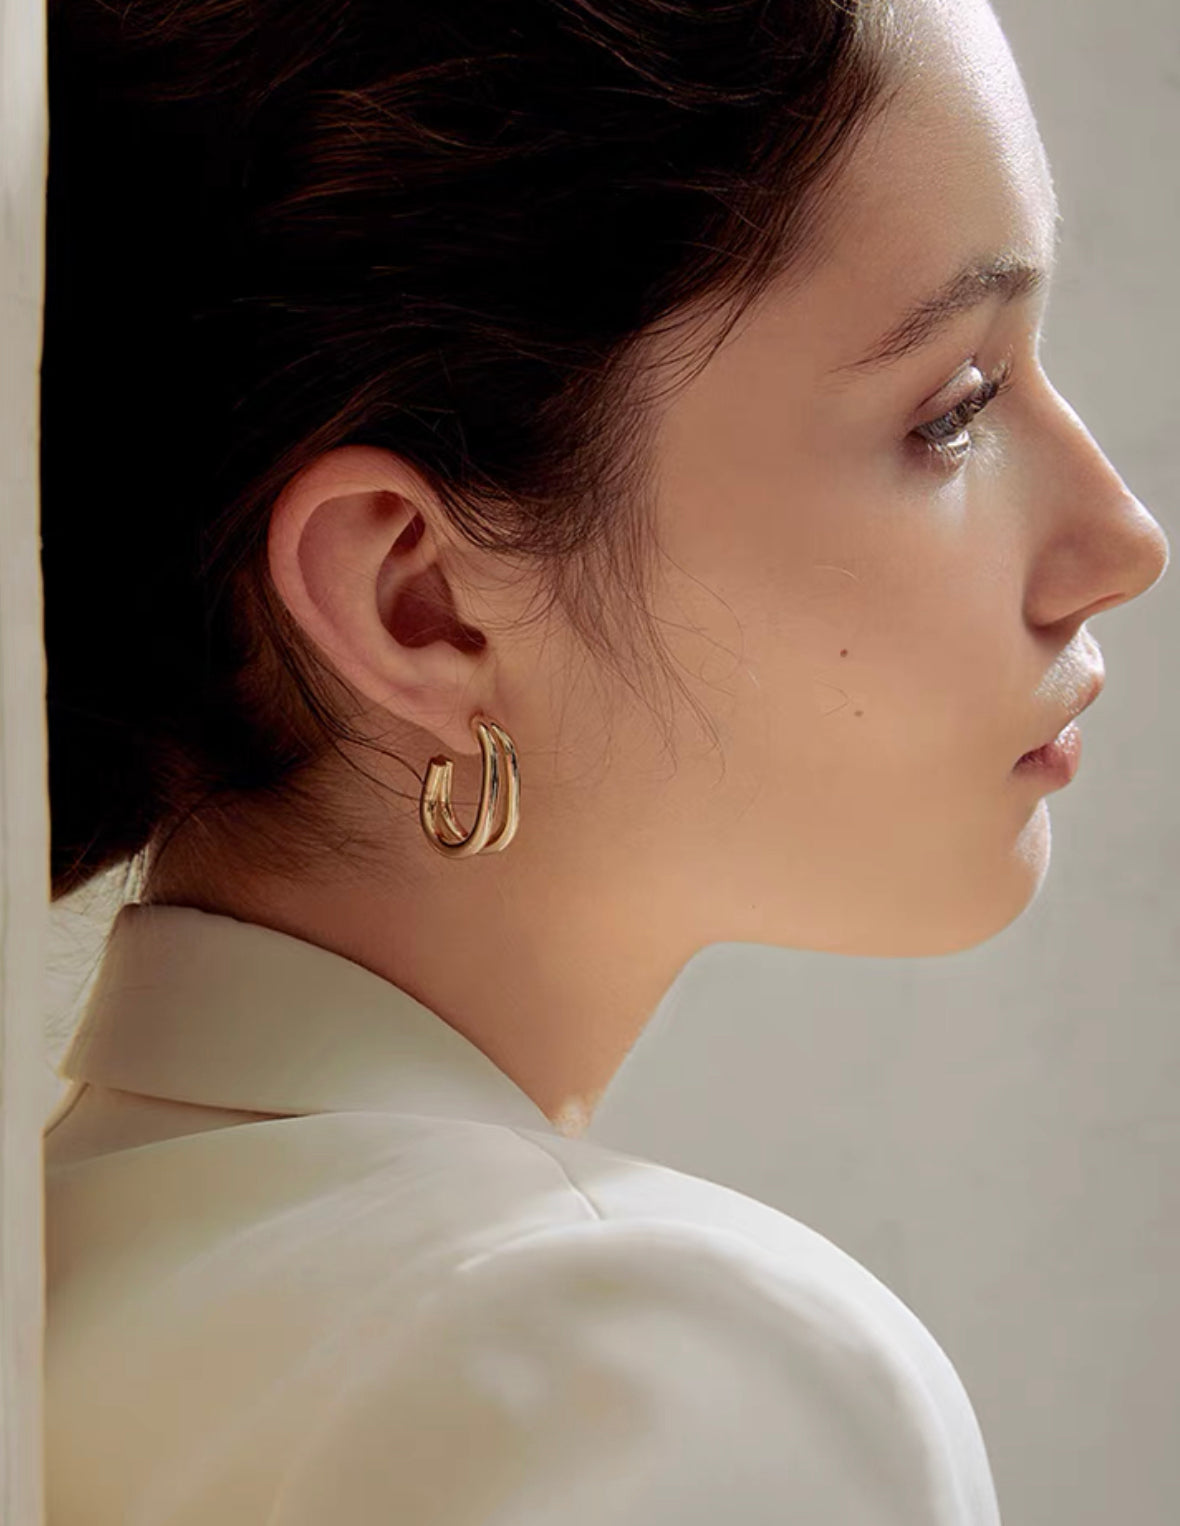 Gold Plated Double Open Loop Stud Earrings